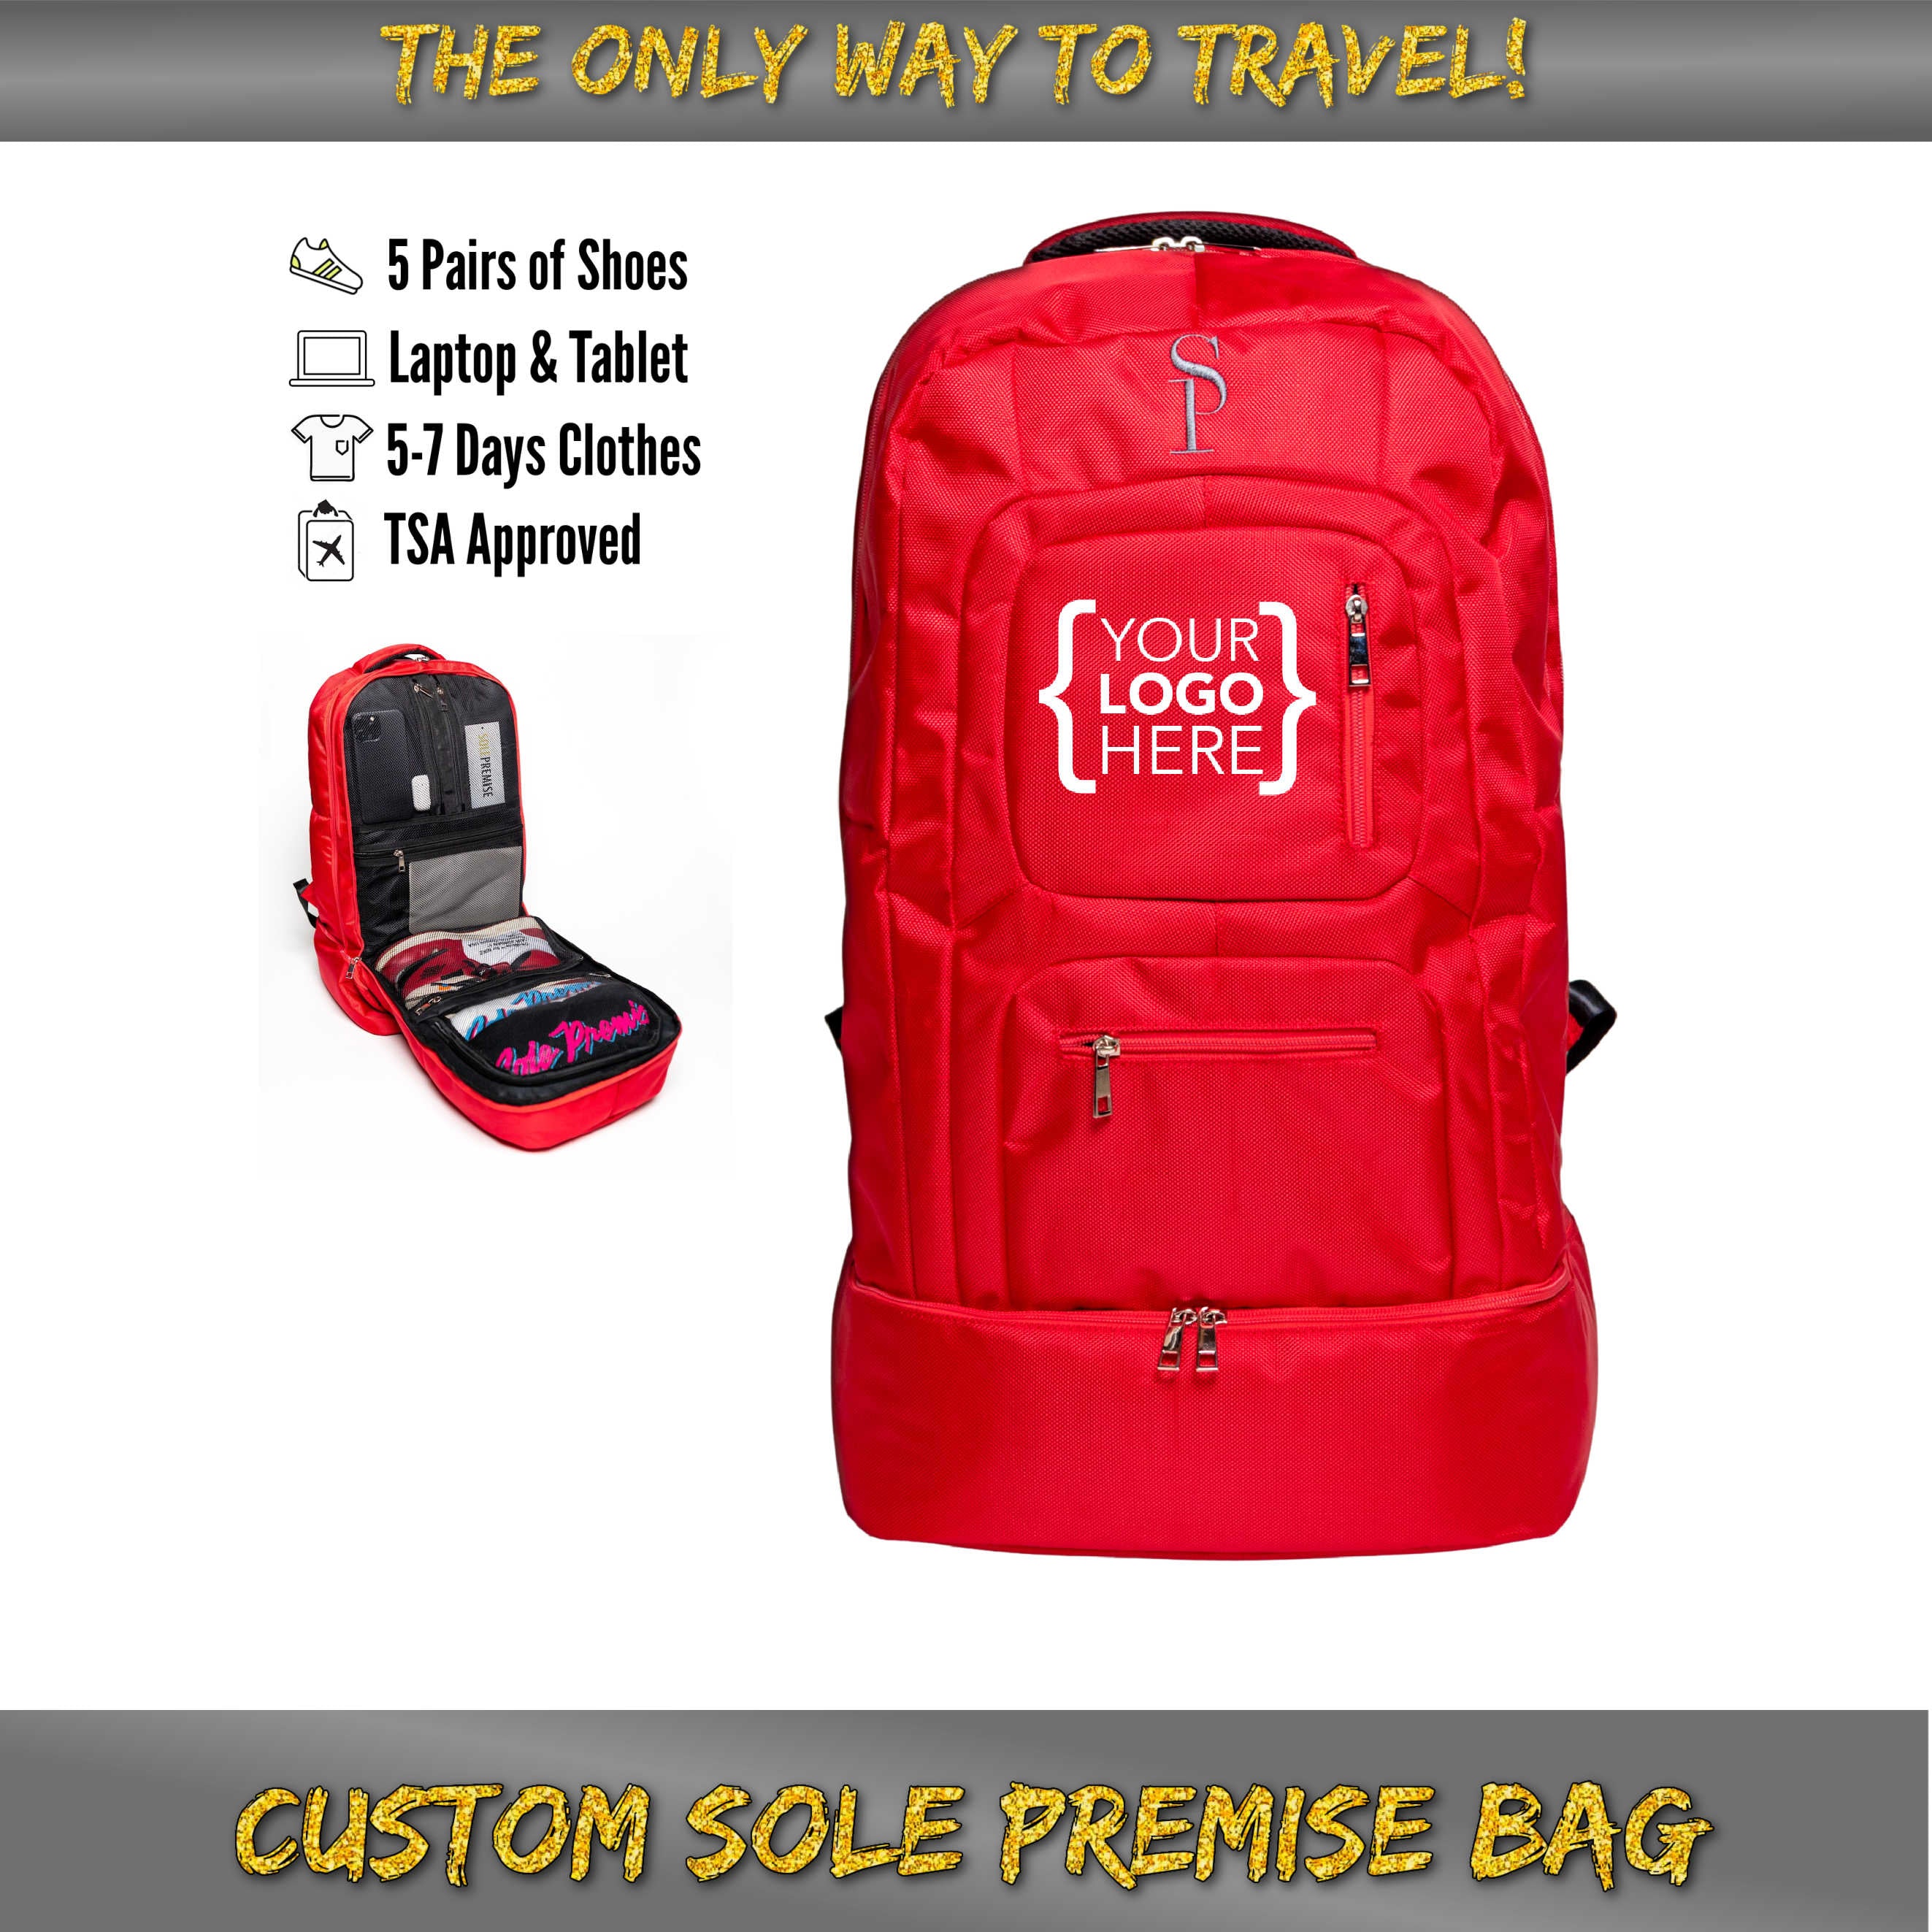 Custom Sole Premise Bag (Customized Gym, Travel, Sports Team Bag) - Sole Premise